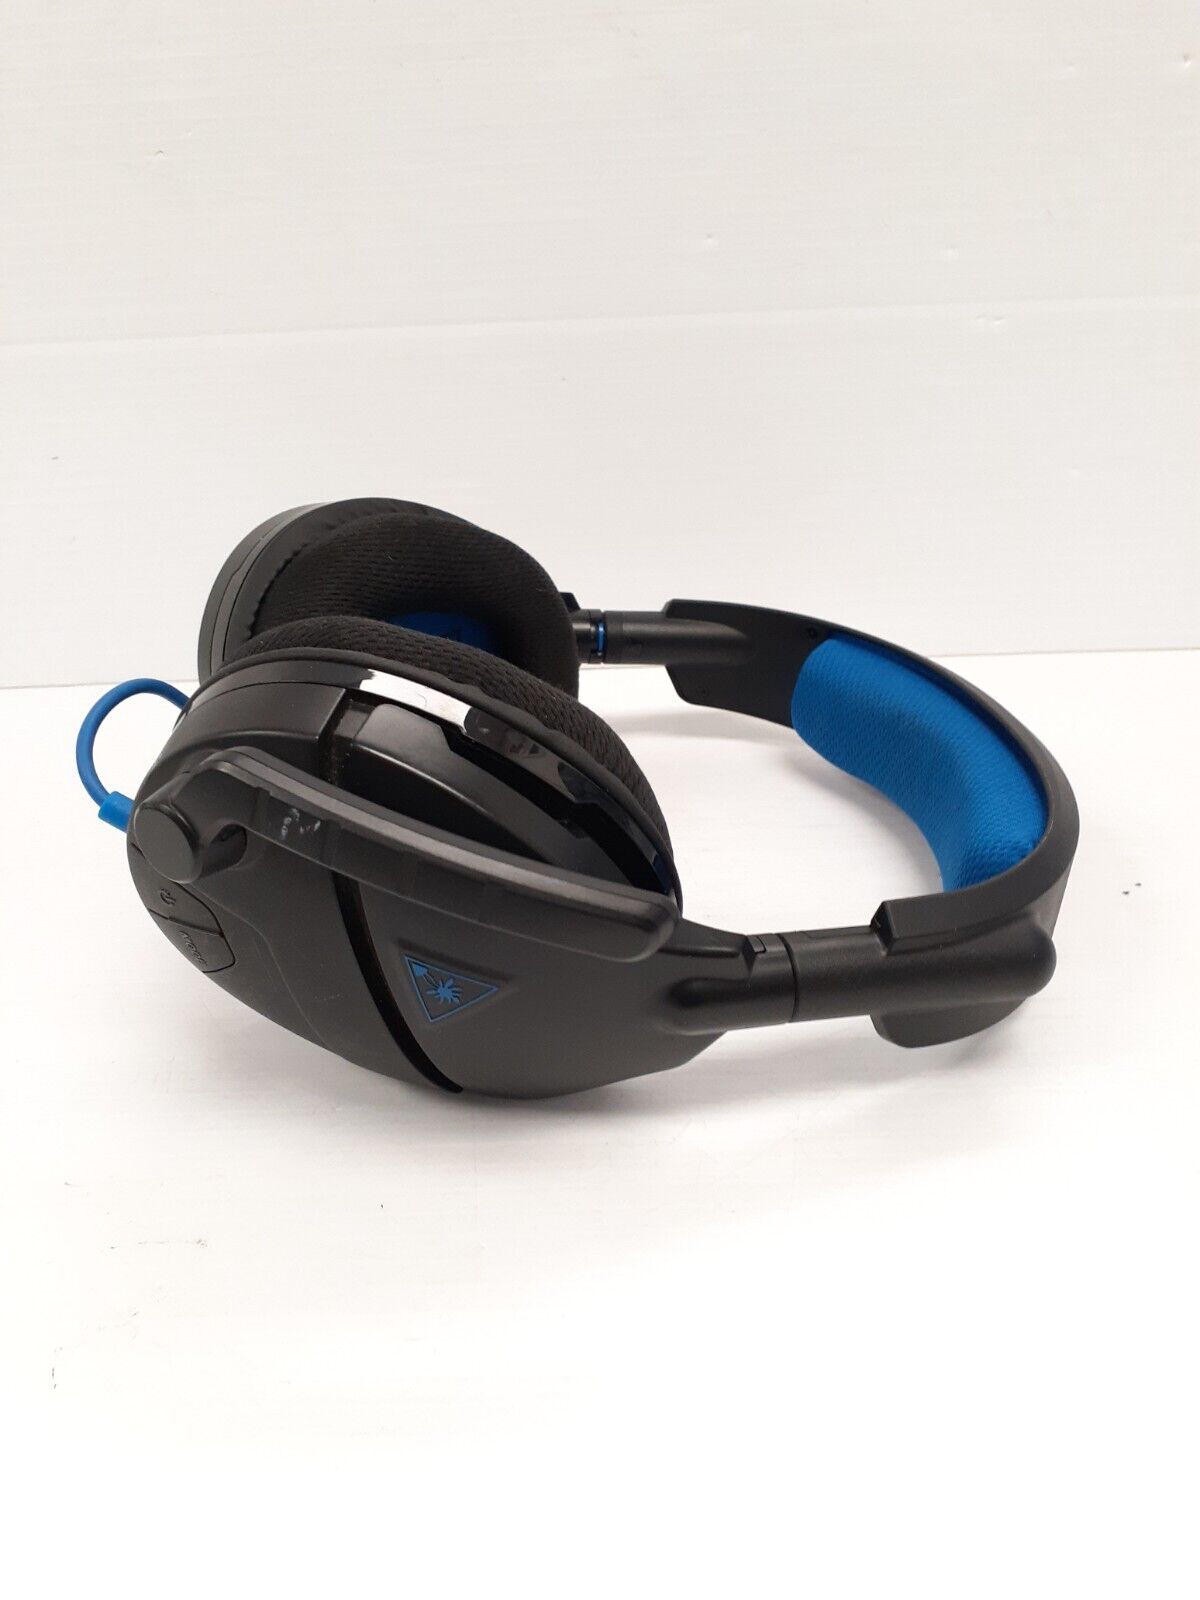 (N69494-1) Turtle Beach Ear Force Stealth 30 PS4 Headset